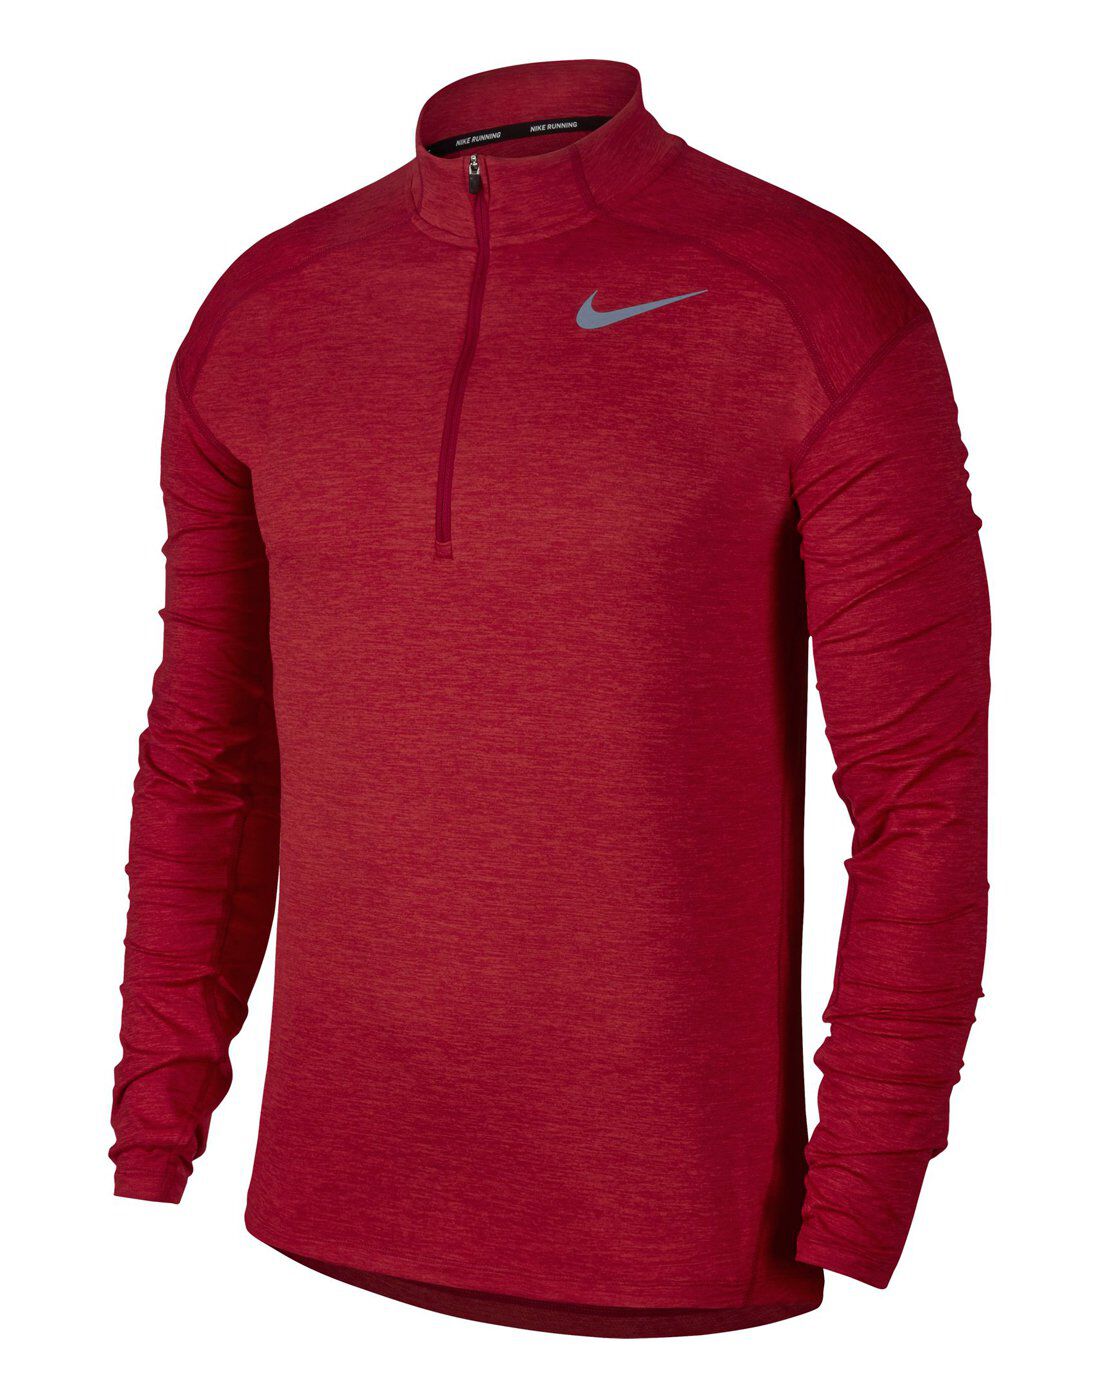 Men's Nike Dry Half Zip | Red | Life 